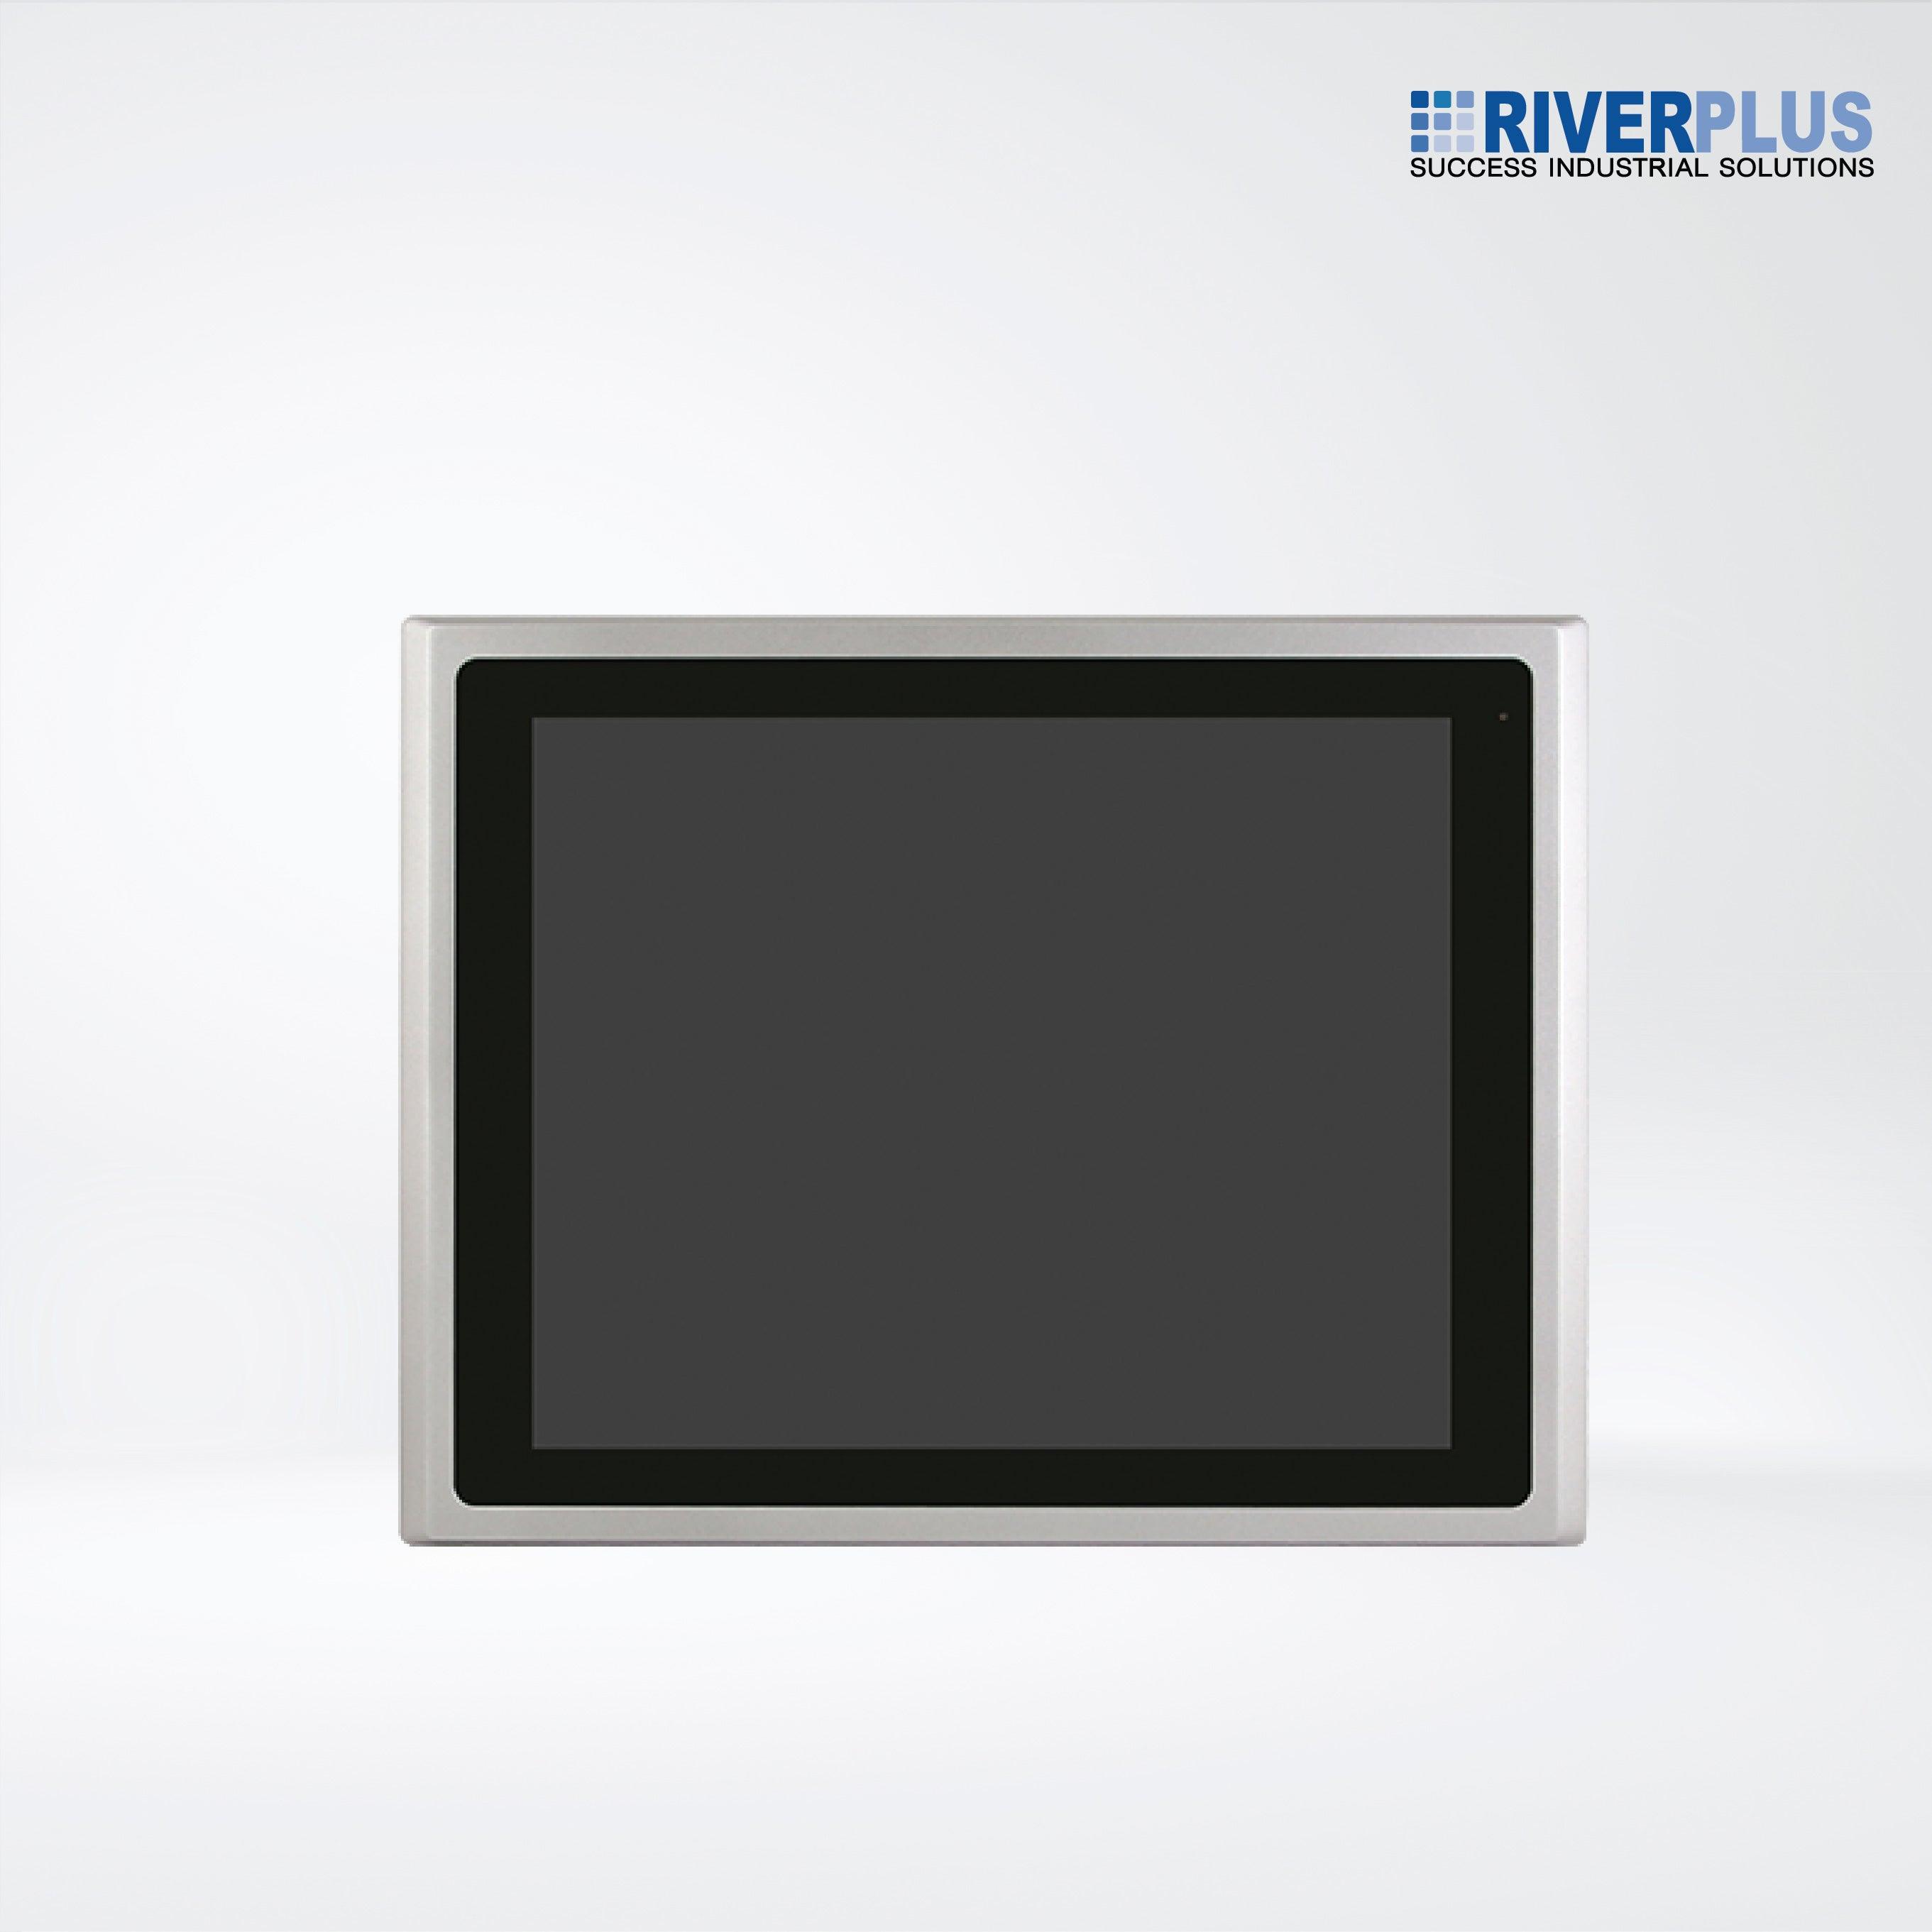 ViPAC-817P 17” Intel Celeron N2930 Fanless Expandable Panel PC - Riverplus